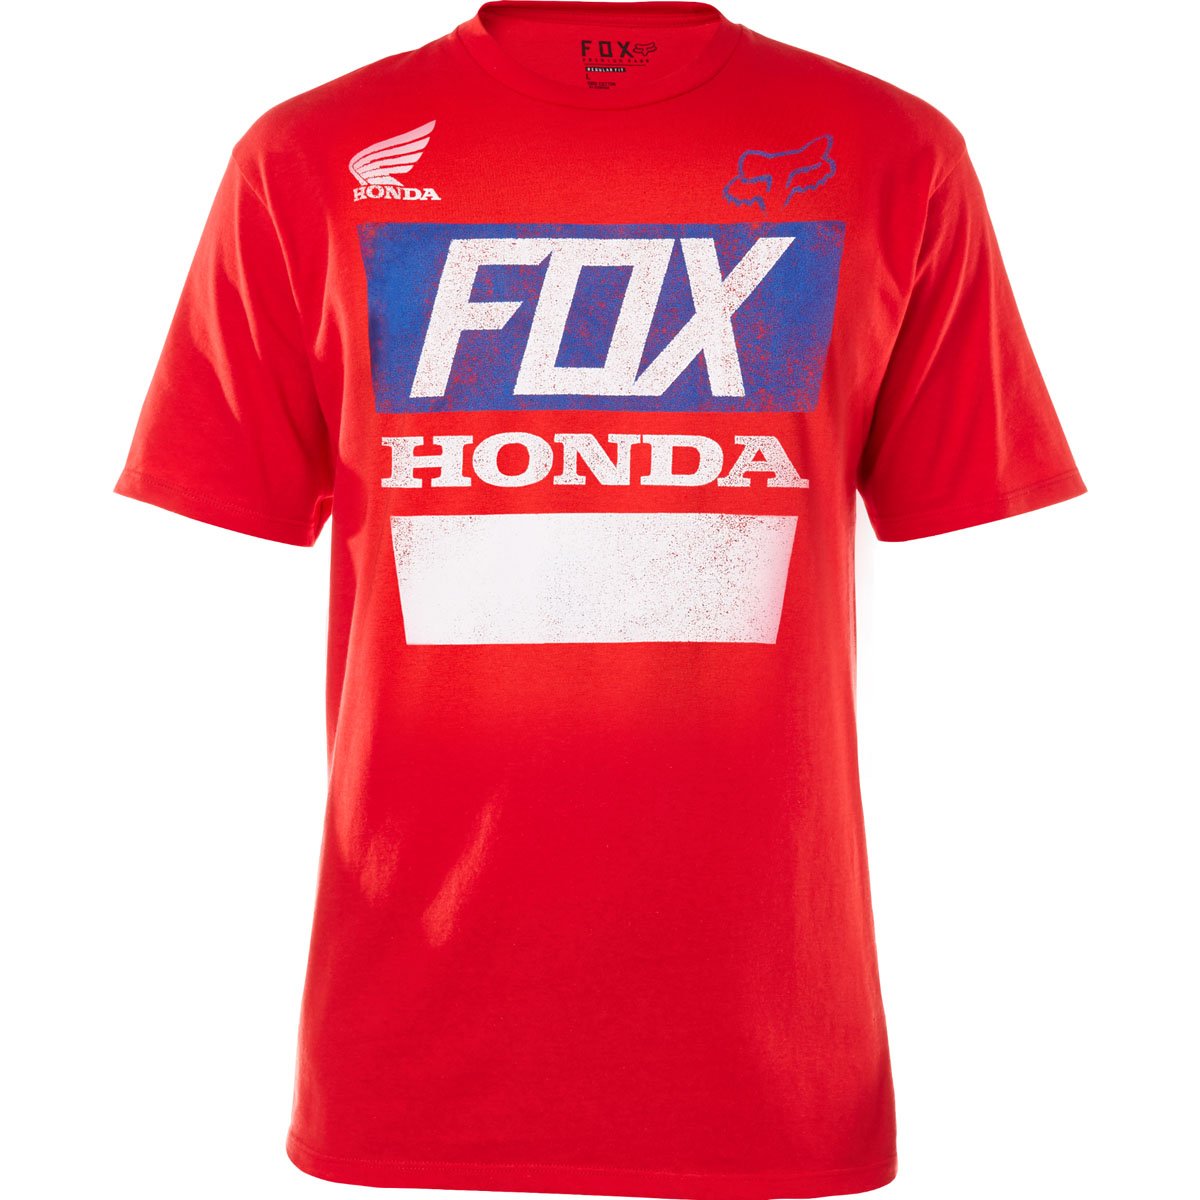 Fox Racing Honda Distressed Tee Red XLarge - ExtremeSupply.com